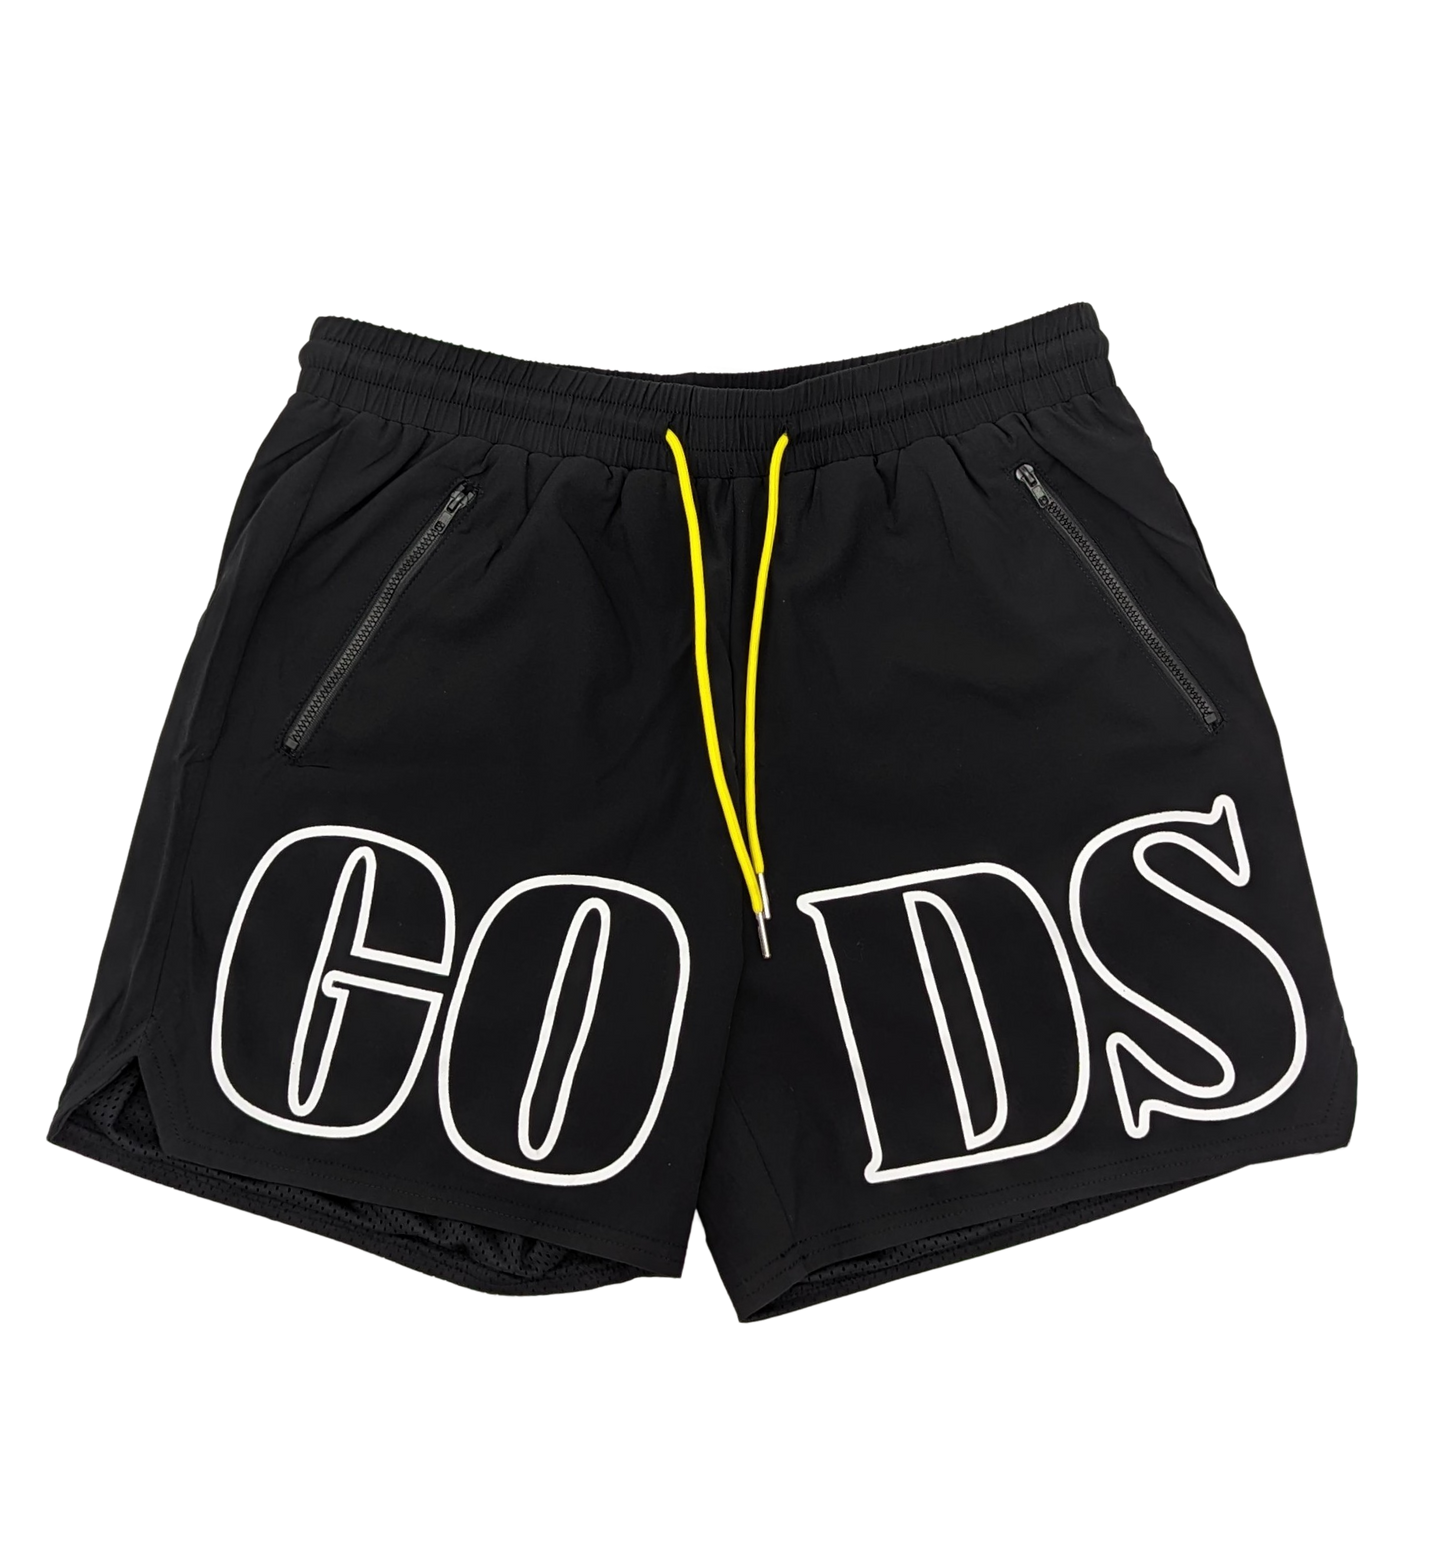 GODS Short Set